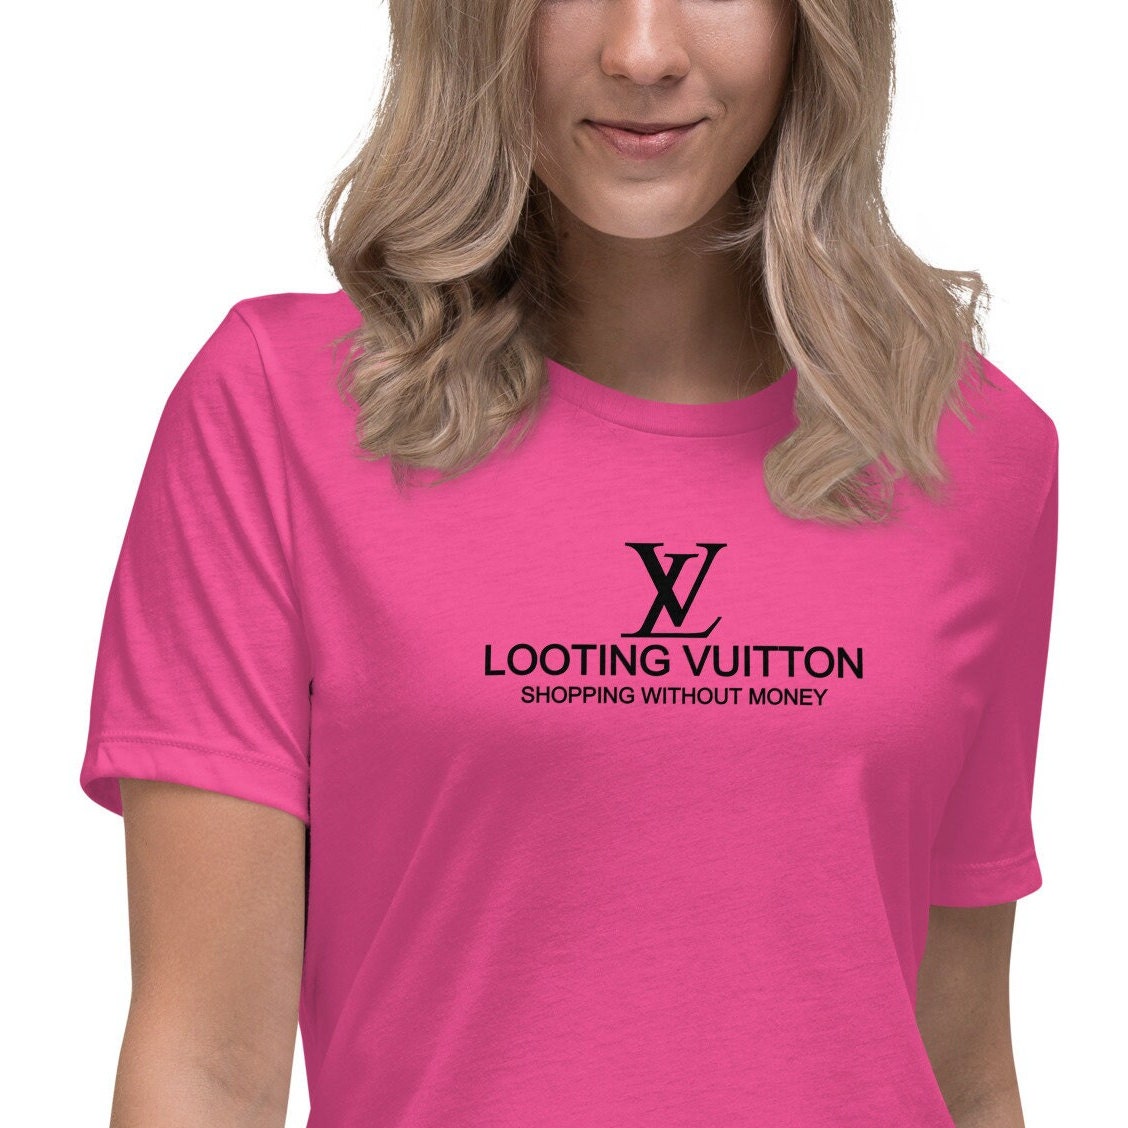 Louis Vuitton Paris LV shirt, hoodie, sweater, ladies-tee and tank top